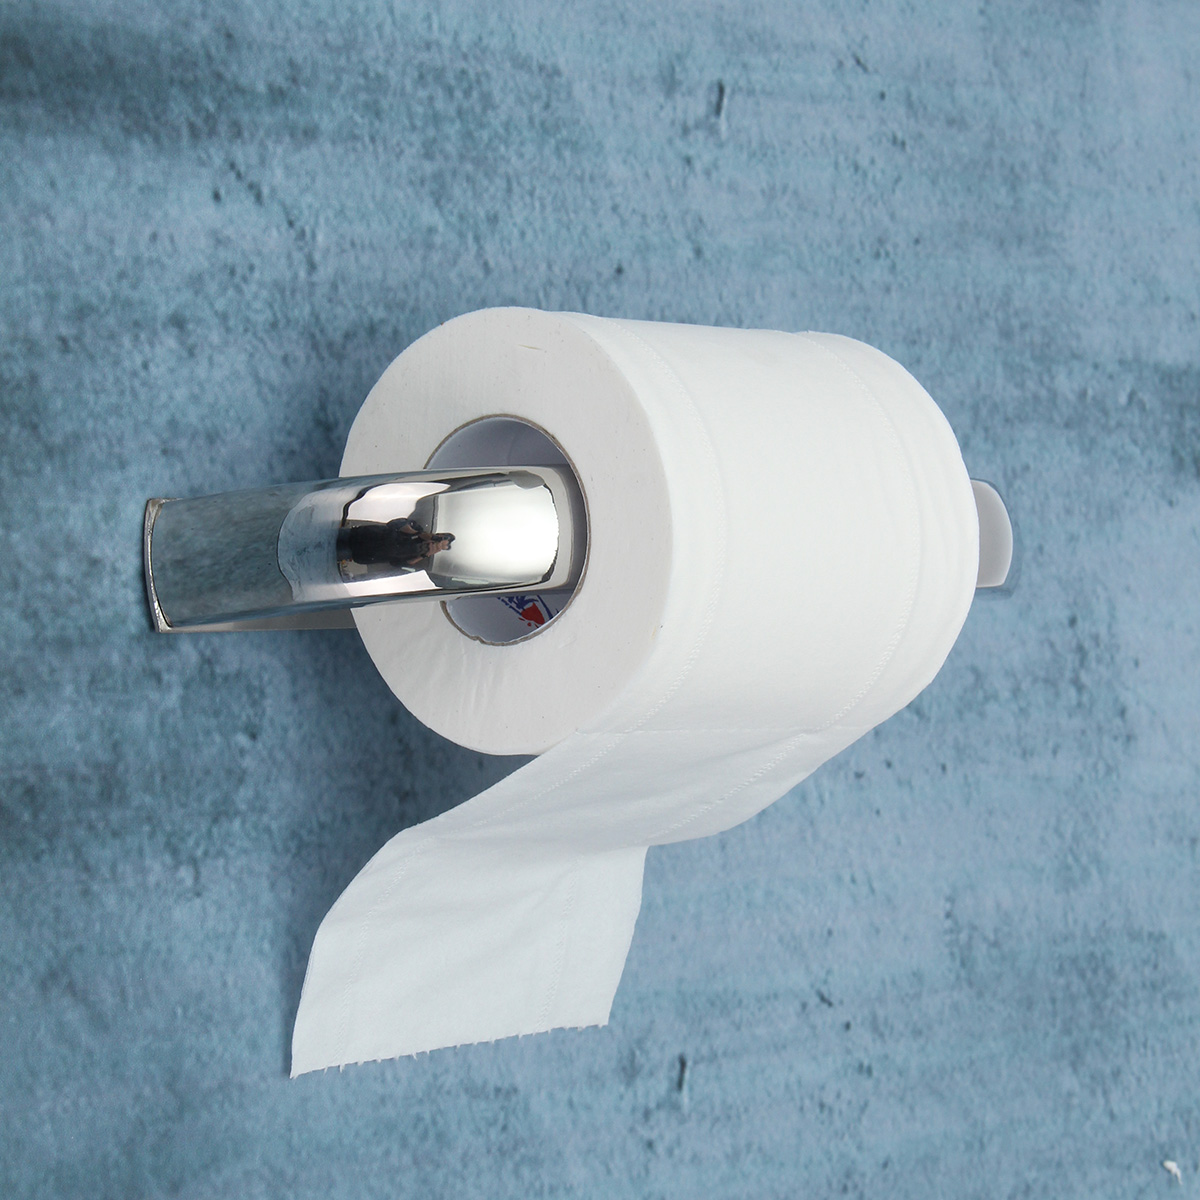 Stainless-Steel-Bathroom-Paper-Shelf-Holder-Tissue-Roll-Rack-Stand-Brecket-Wall-Mount-1333052